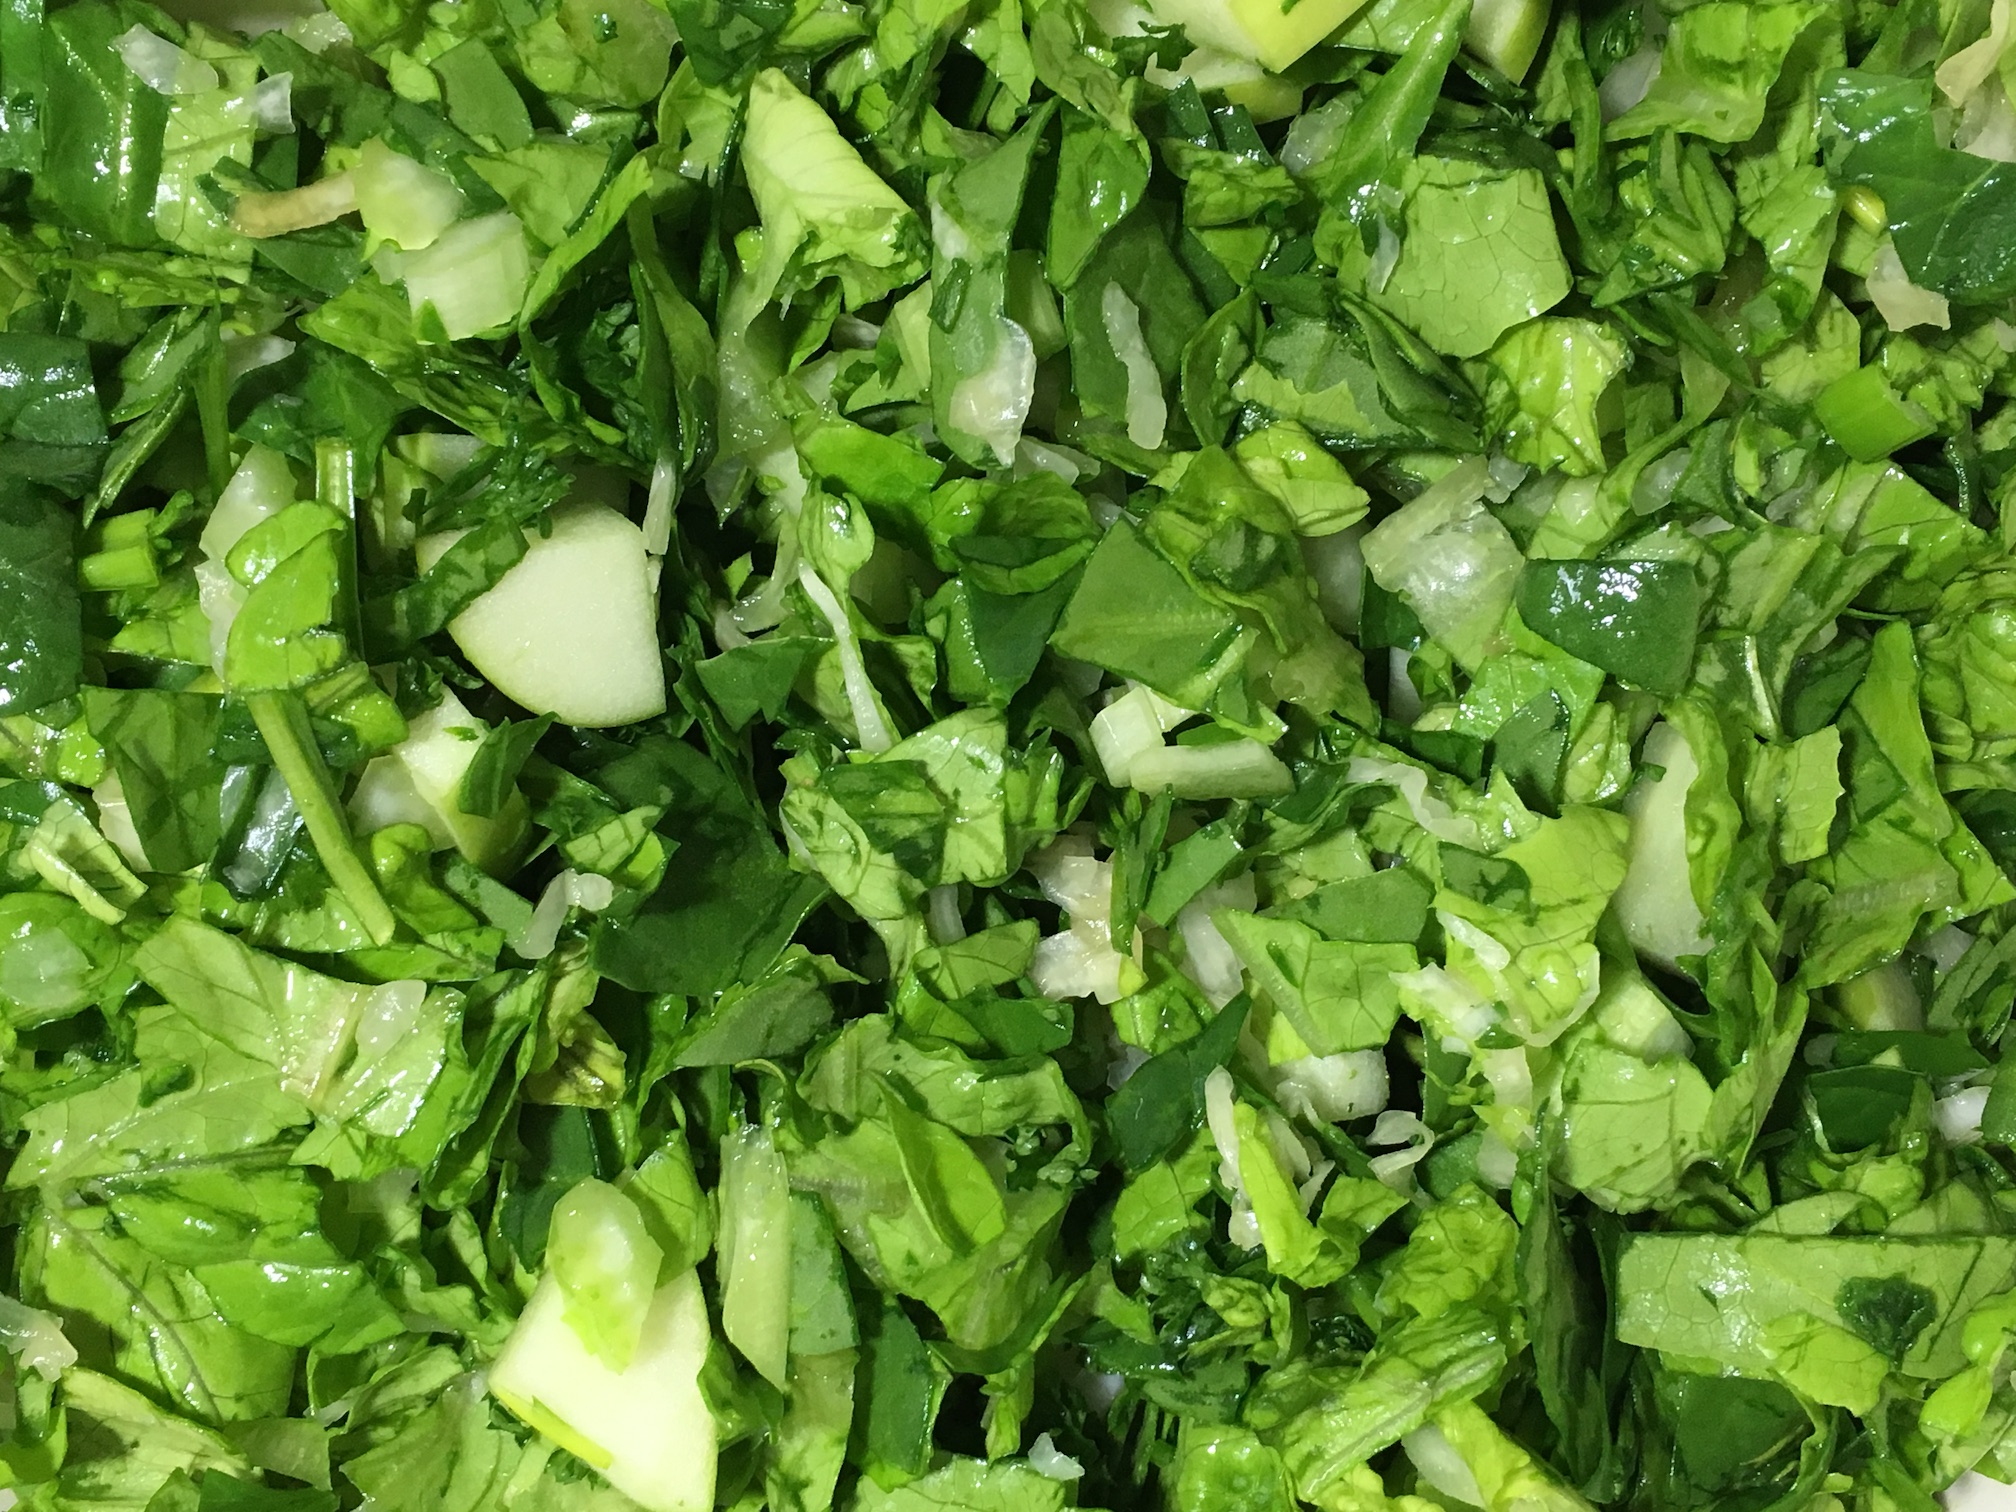 Lots of Greens Salad!